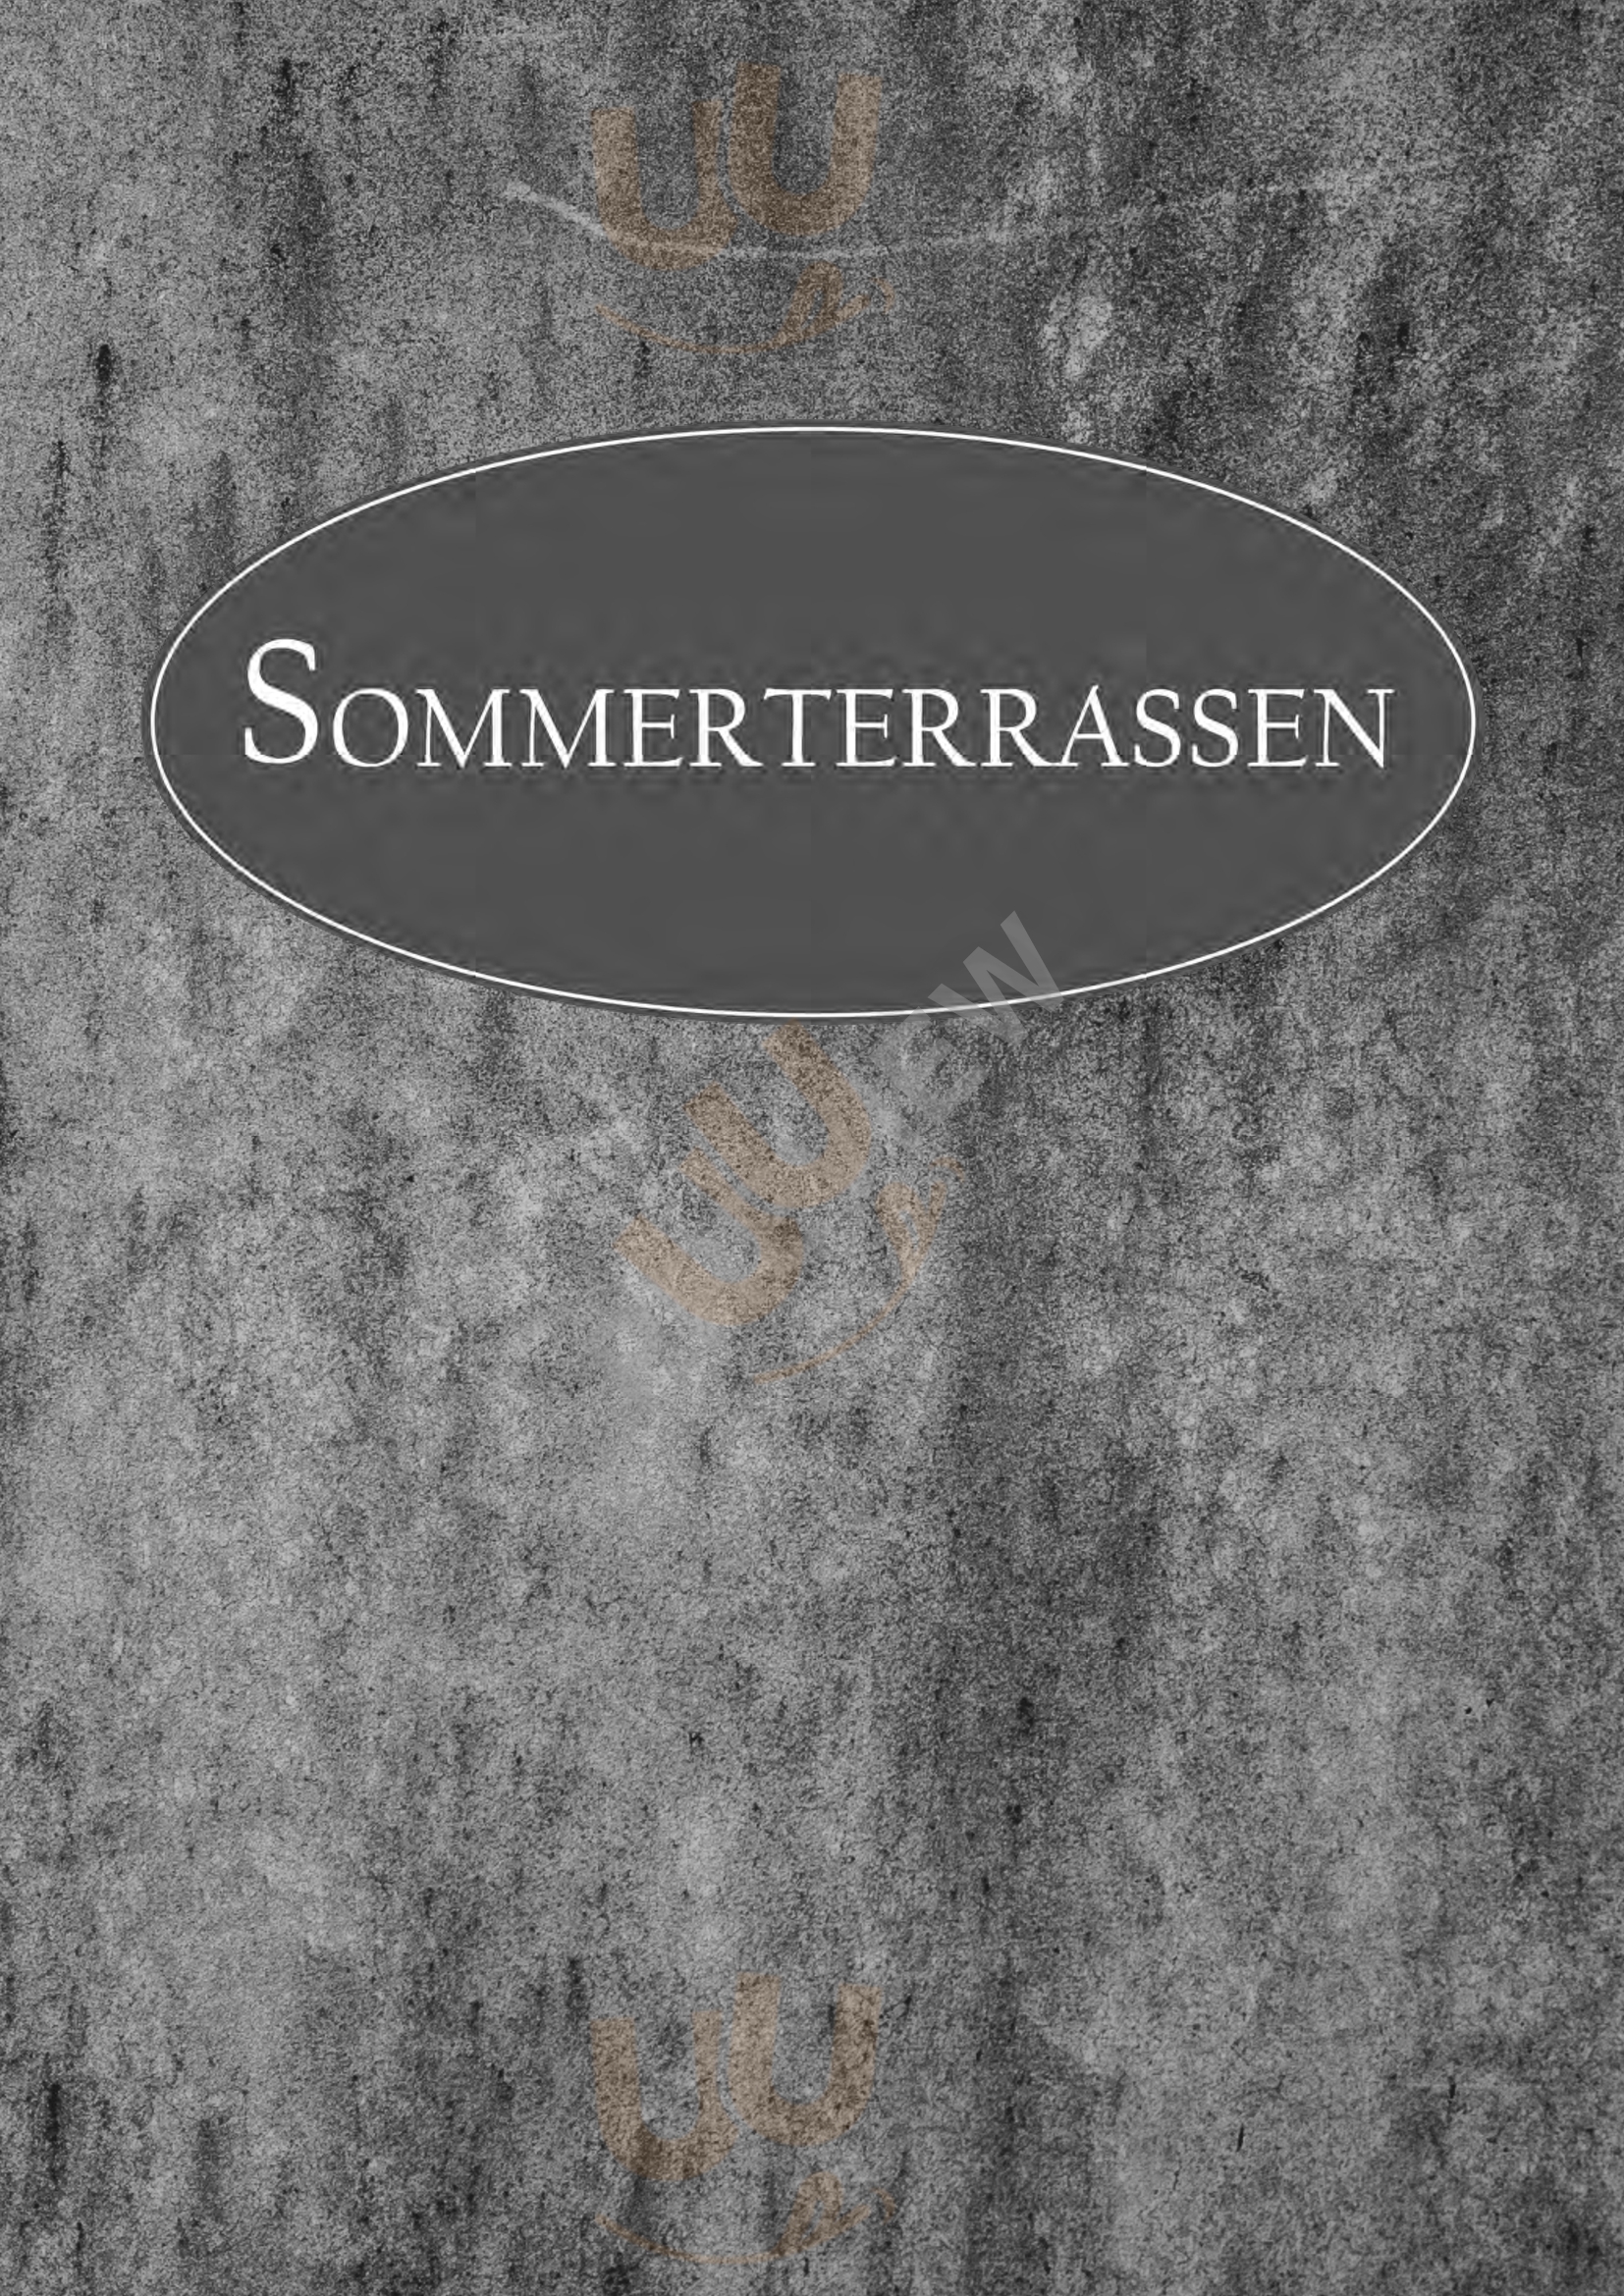 Café Sommerterrassen Hamburg Menu - 1